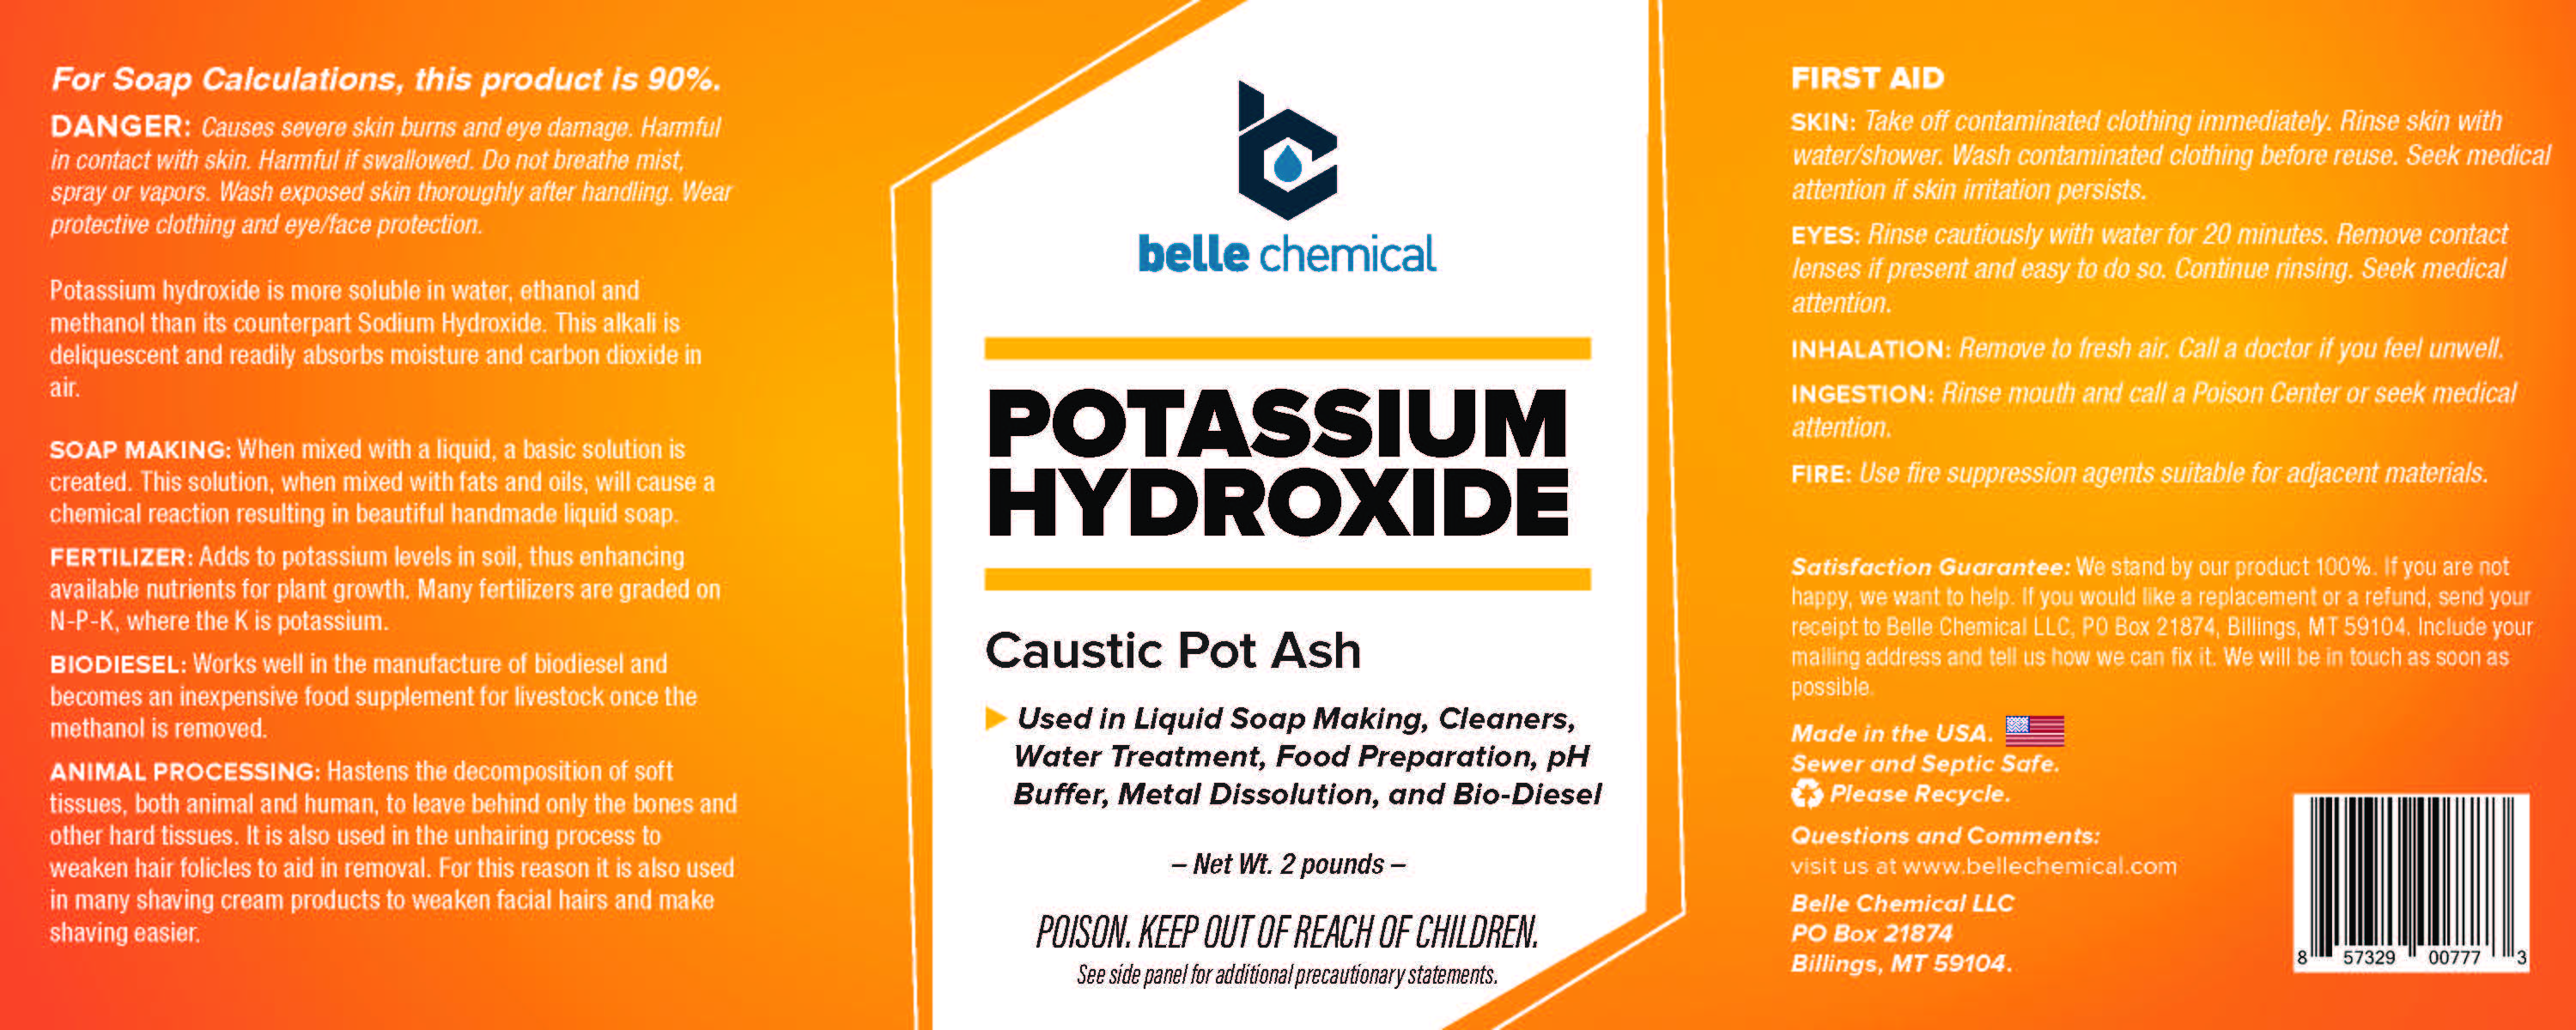 Potassium Hydroxide (Food Grade) 2 Pound Jar - image 2 of 2